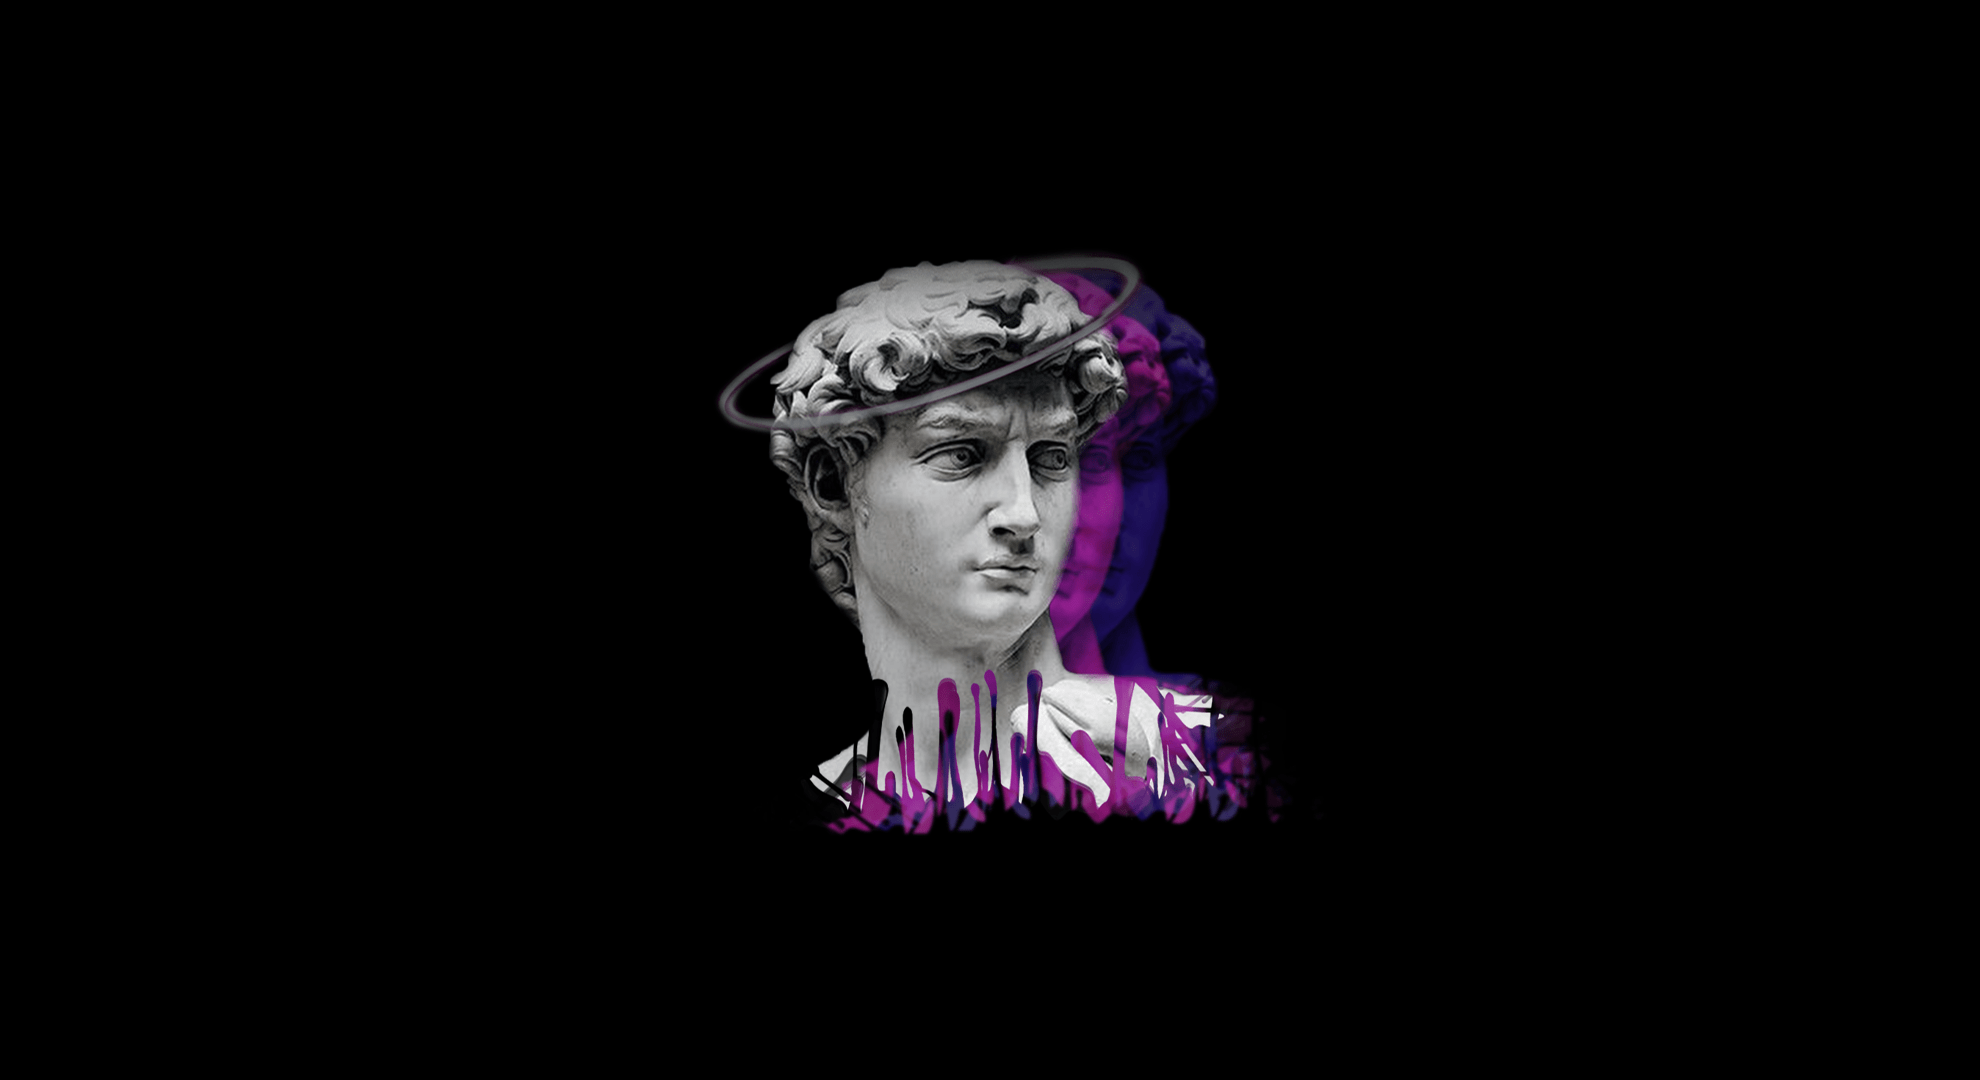 A purple and black image of the head - Greek statue, dark vaporwave